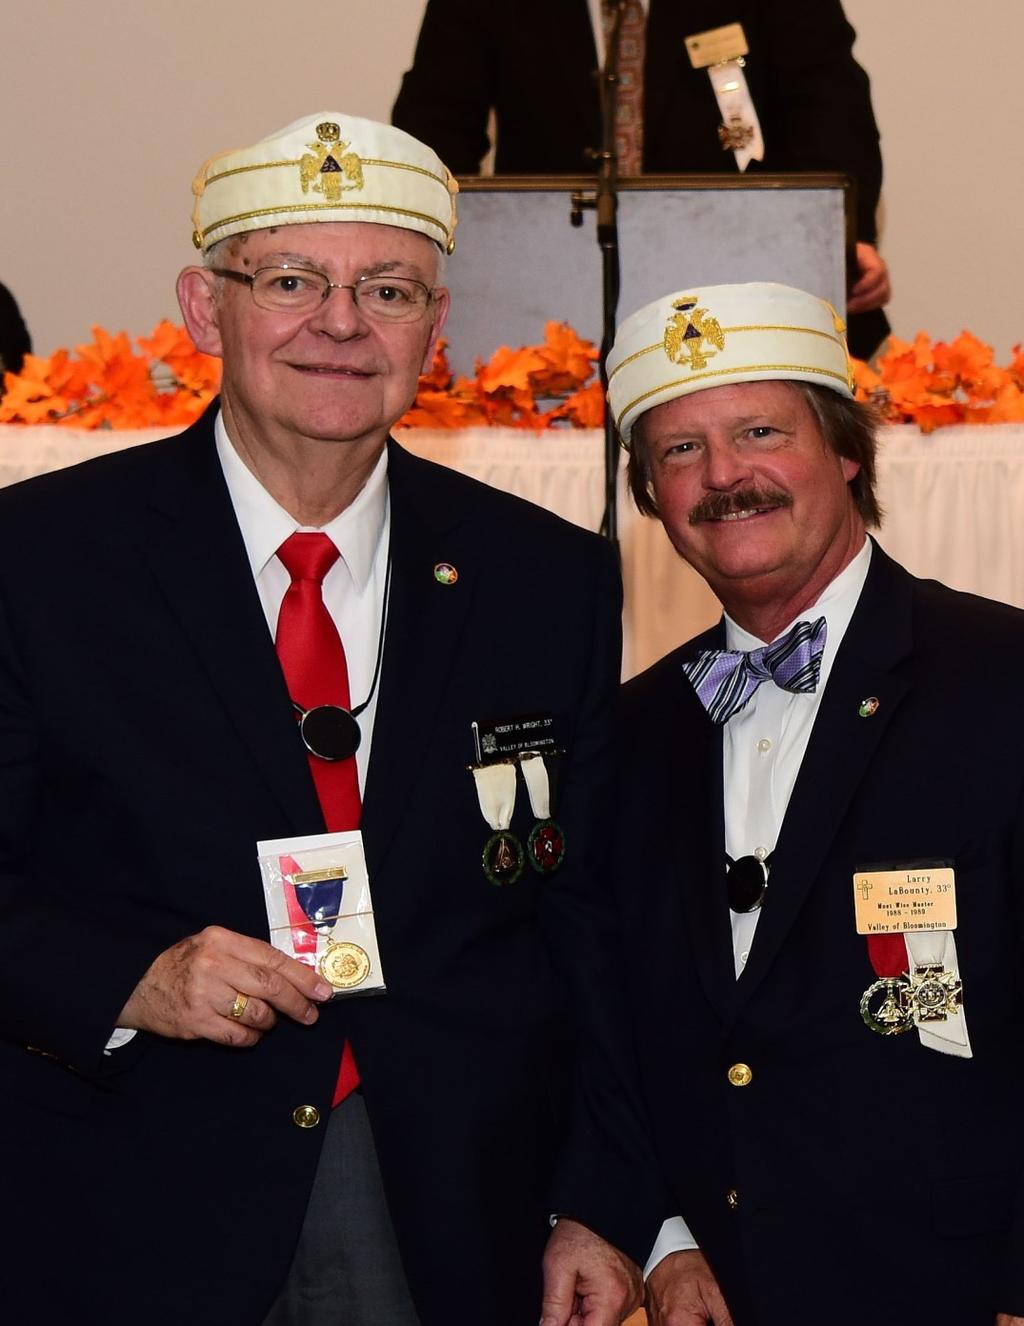 Meritorious Service Award recipients Adam and Ben Young